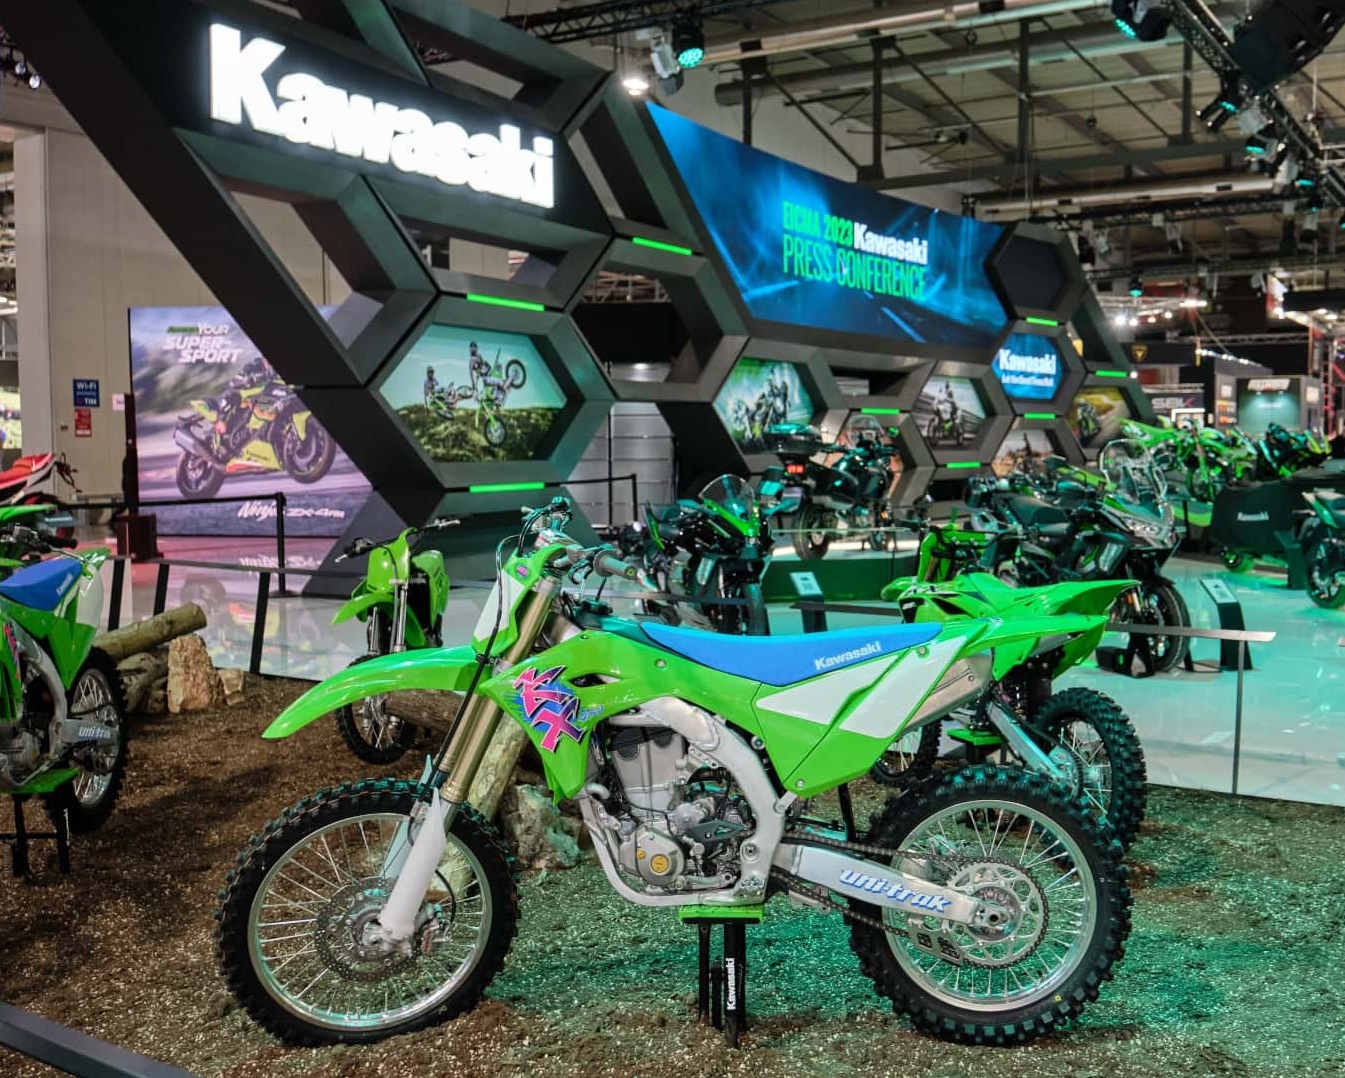 Kawasaki bị trộm xe tại triển lãm - Ảnh 2.